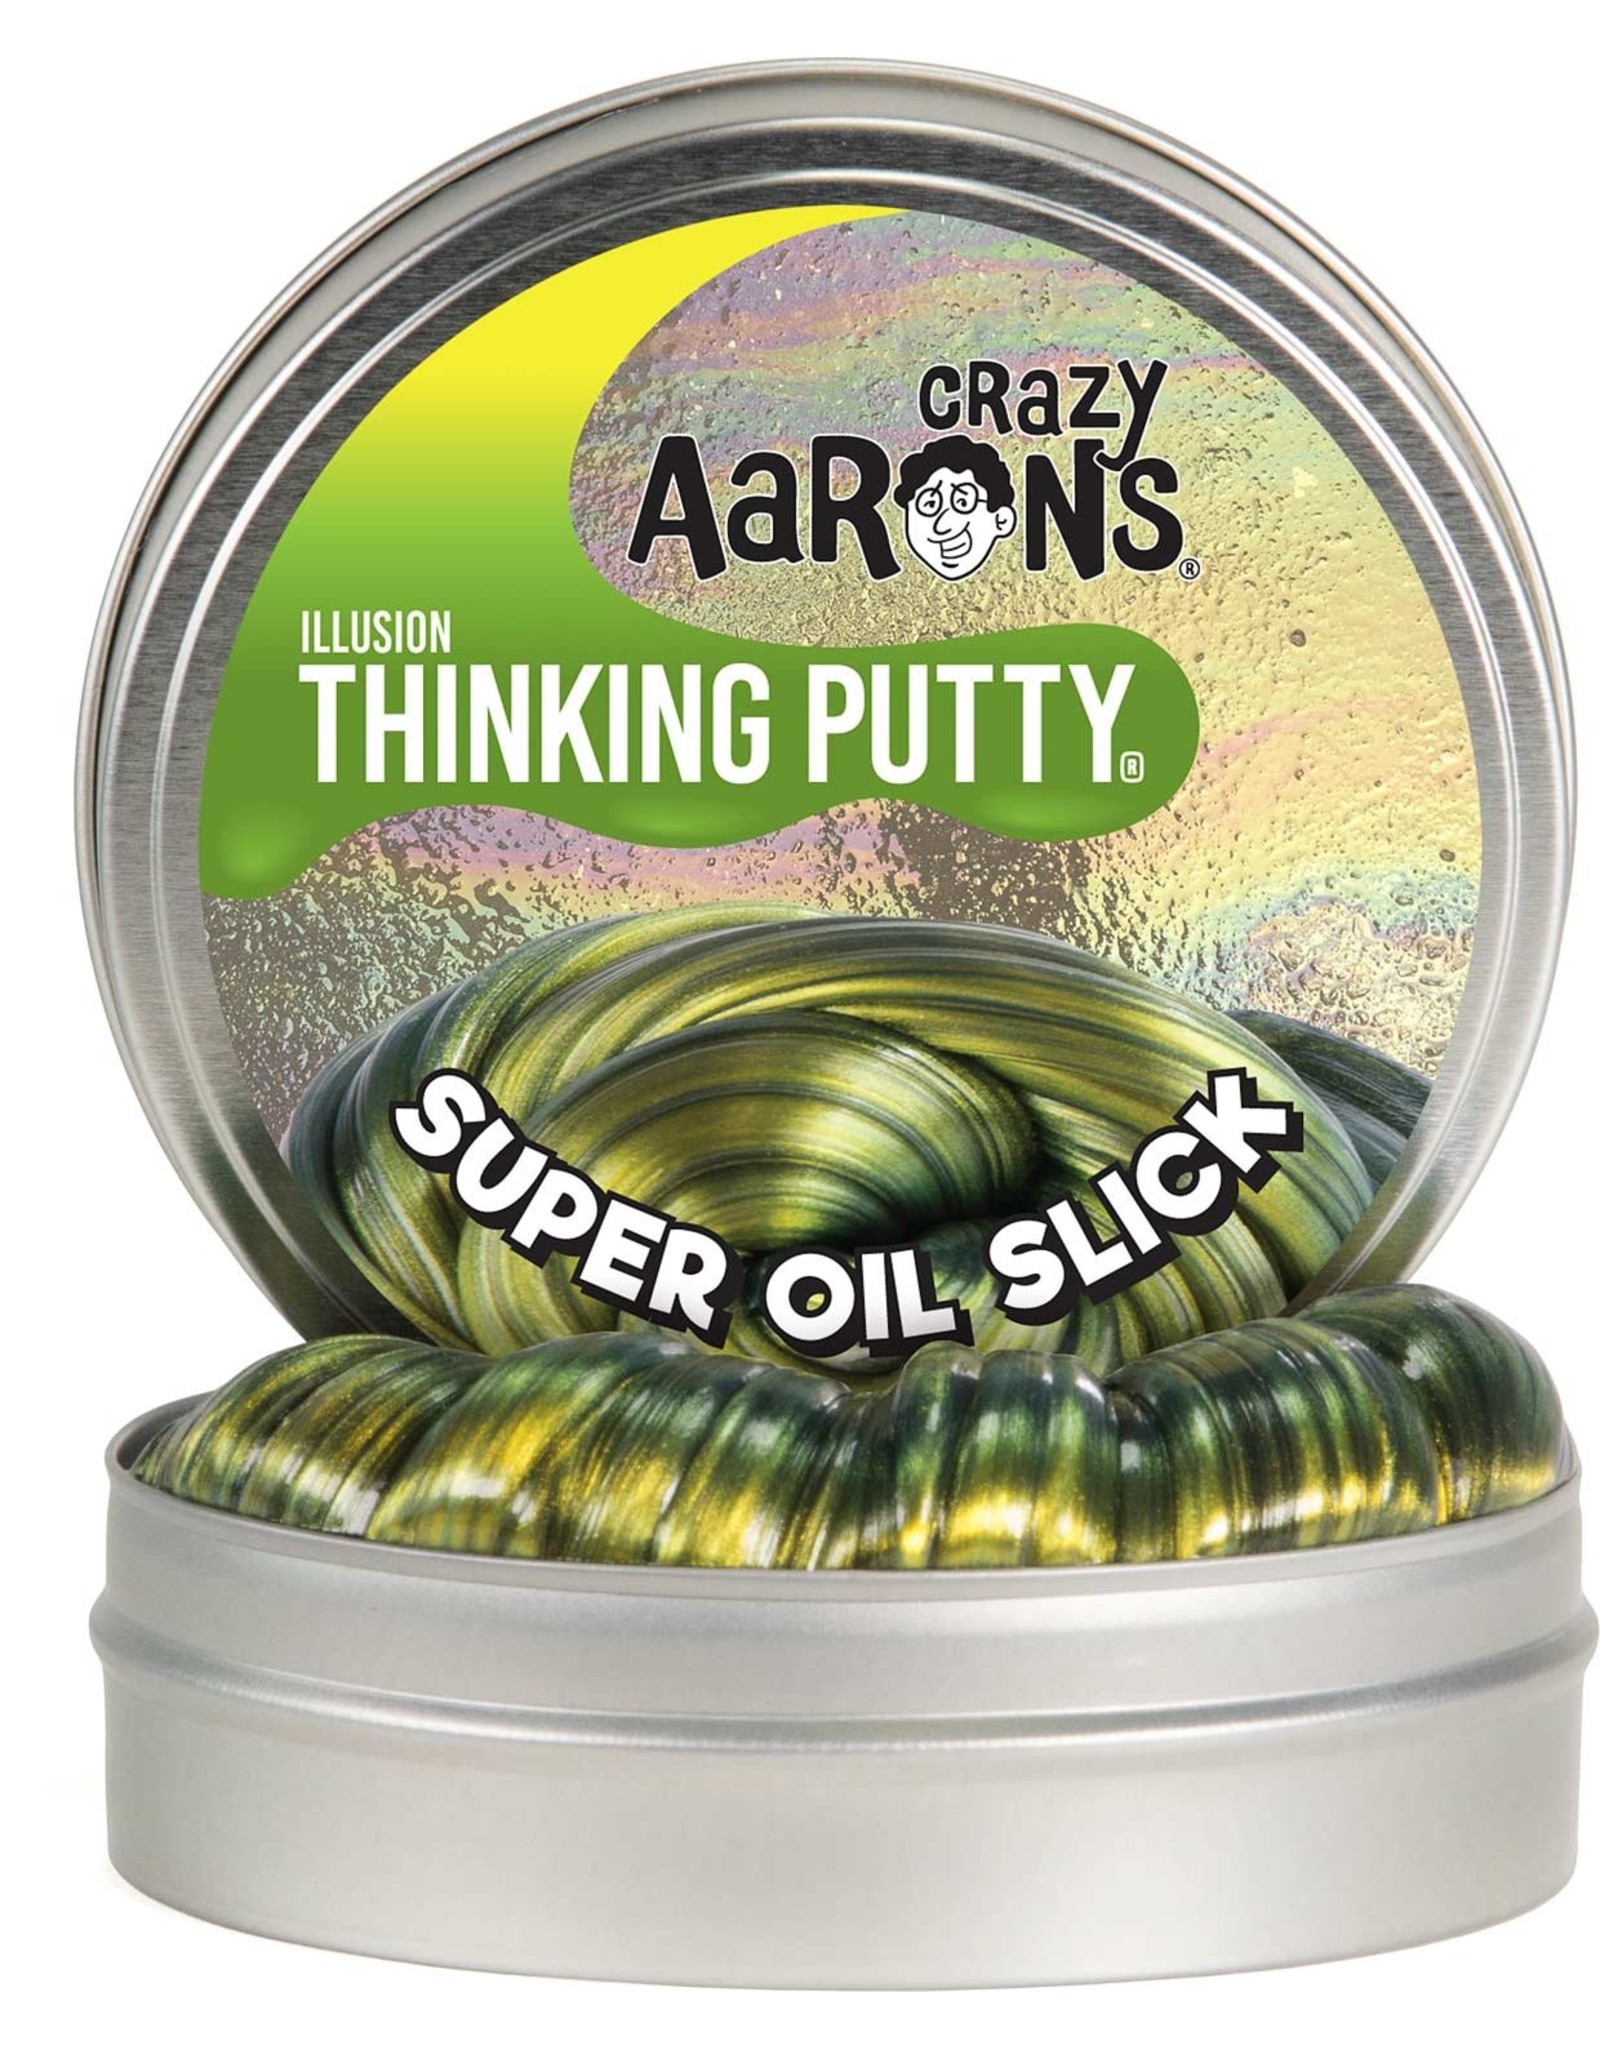 4" Super Oil Slick Putty